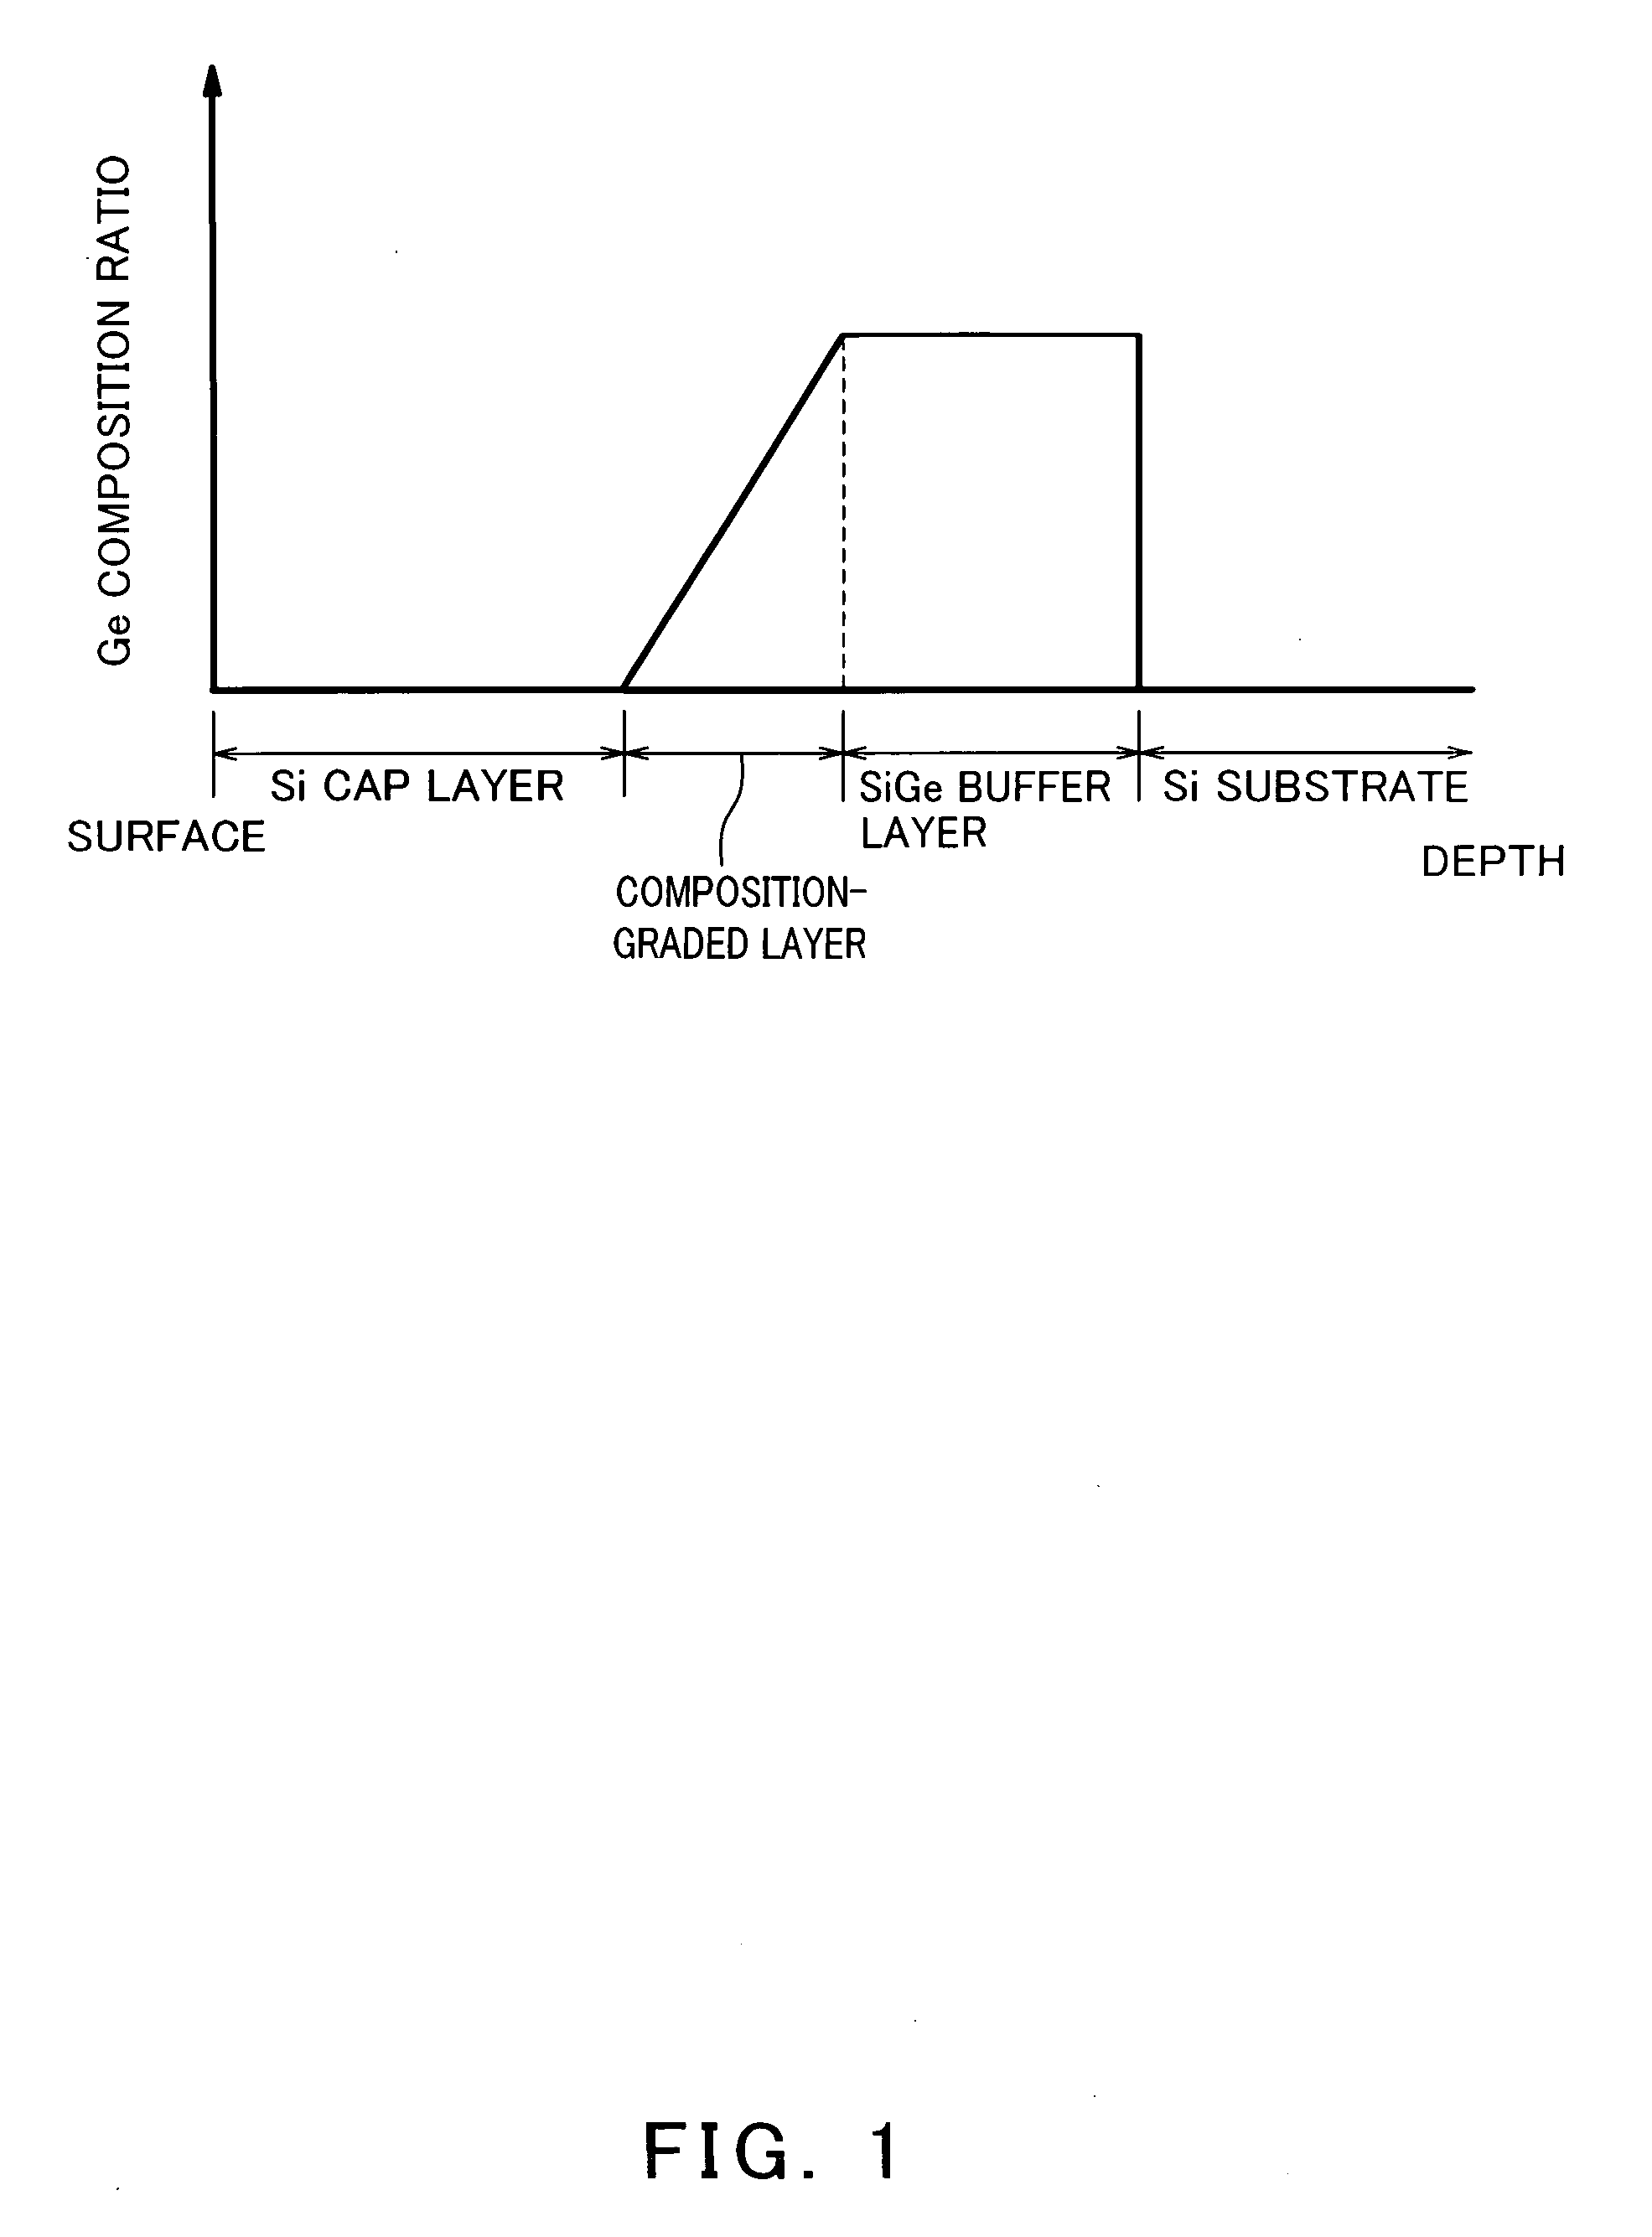 Method of estimating substrate temperature